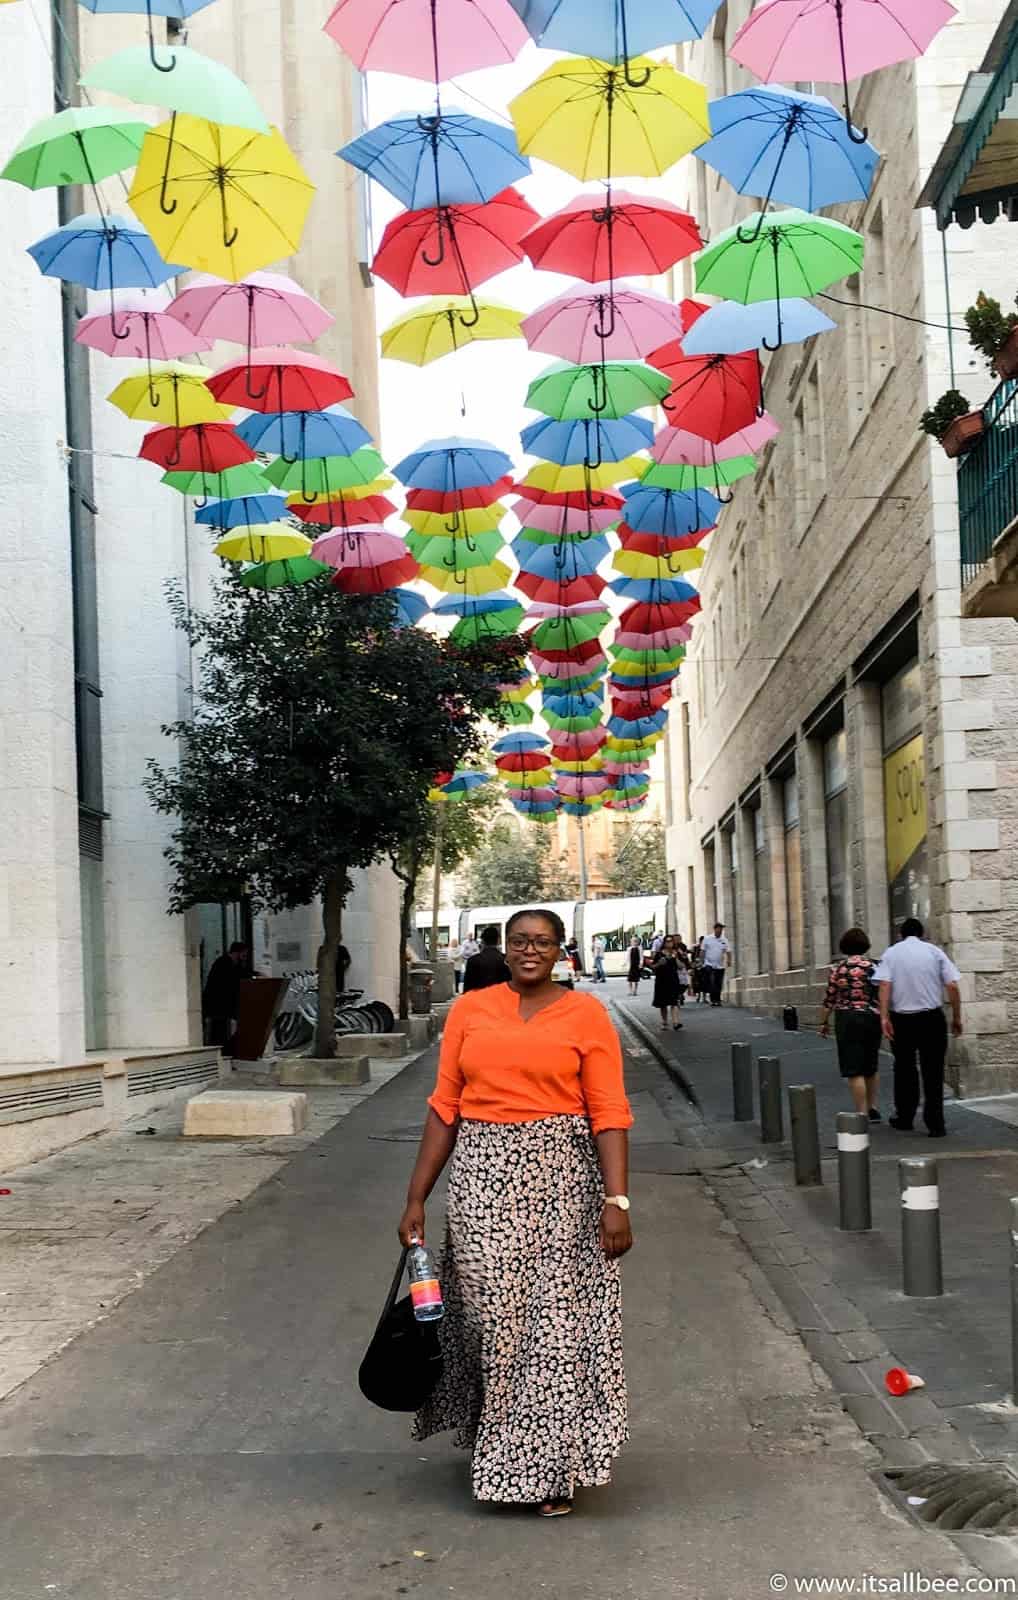 jerusalem israel pictures | The Umbrella Project | Exploring Jerusalem's Instagrammable Streets